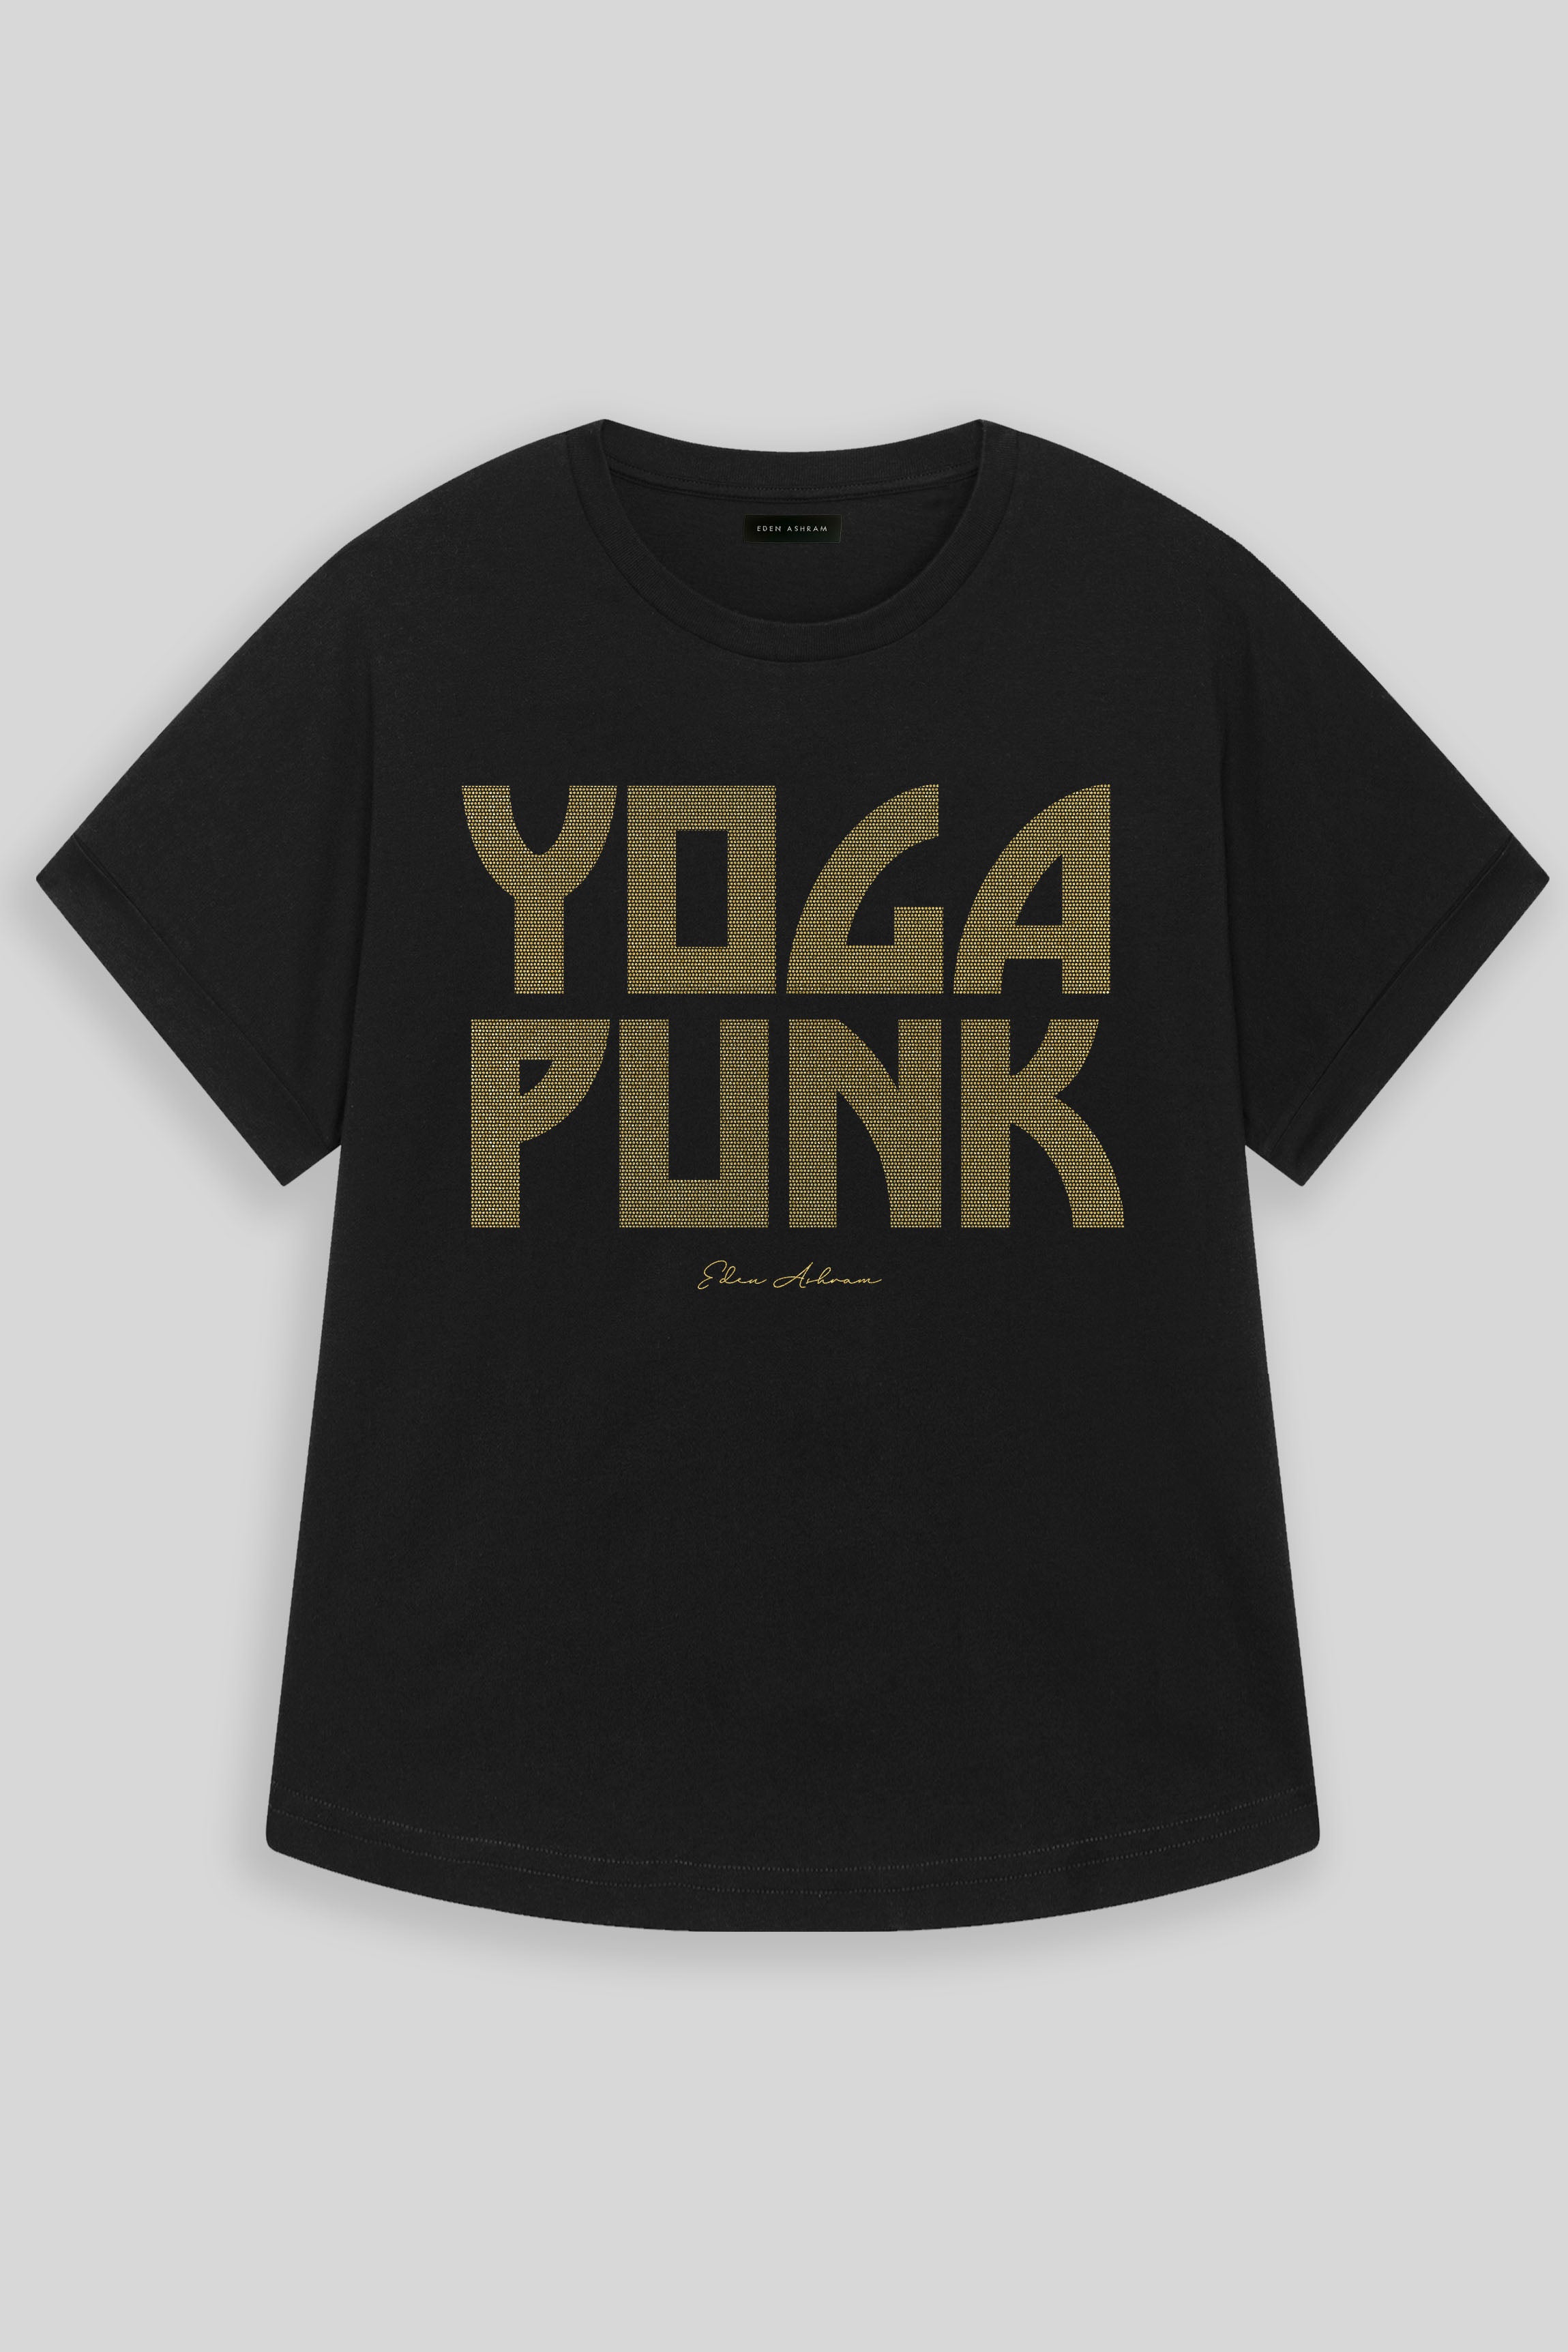 EDEN ASHRAM Yoga Punk Premium Oversized Rolled Sleeve T-Shirt Black